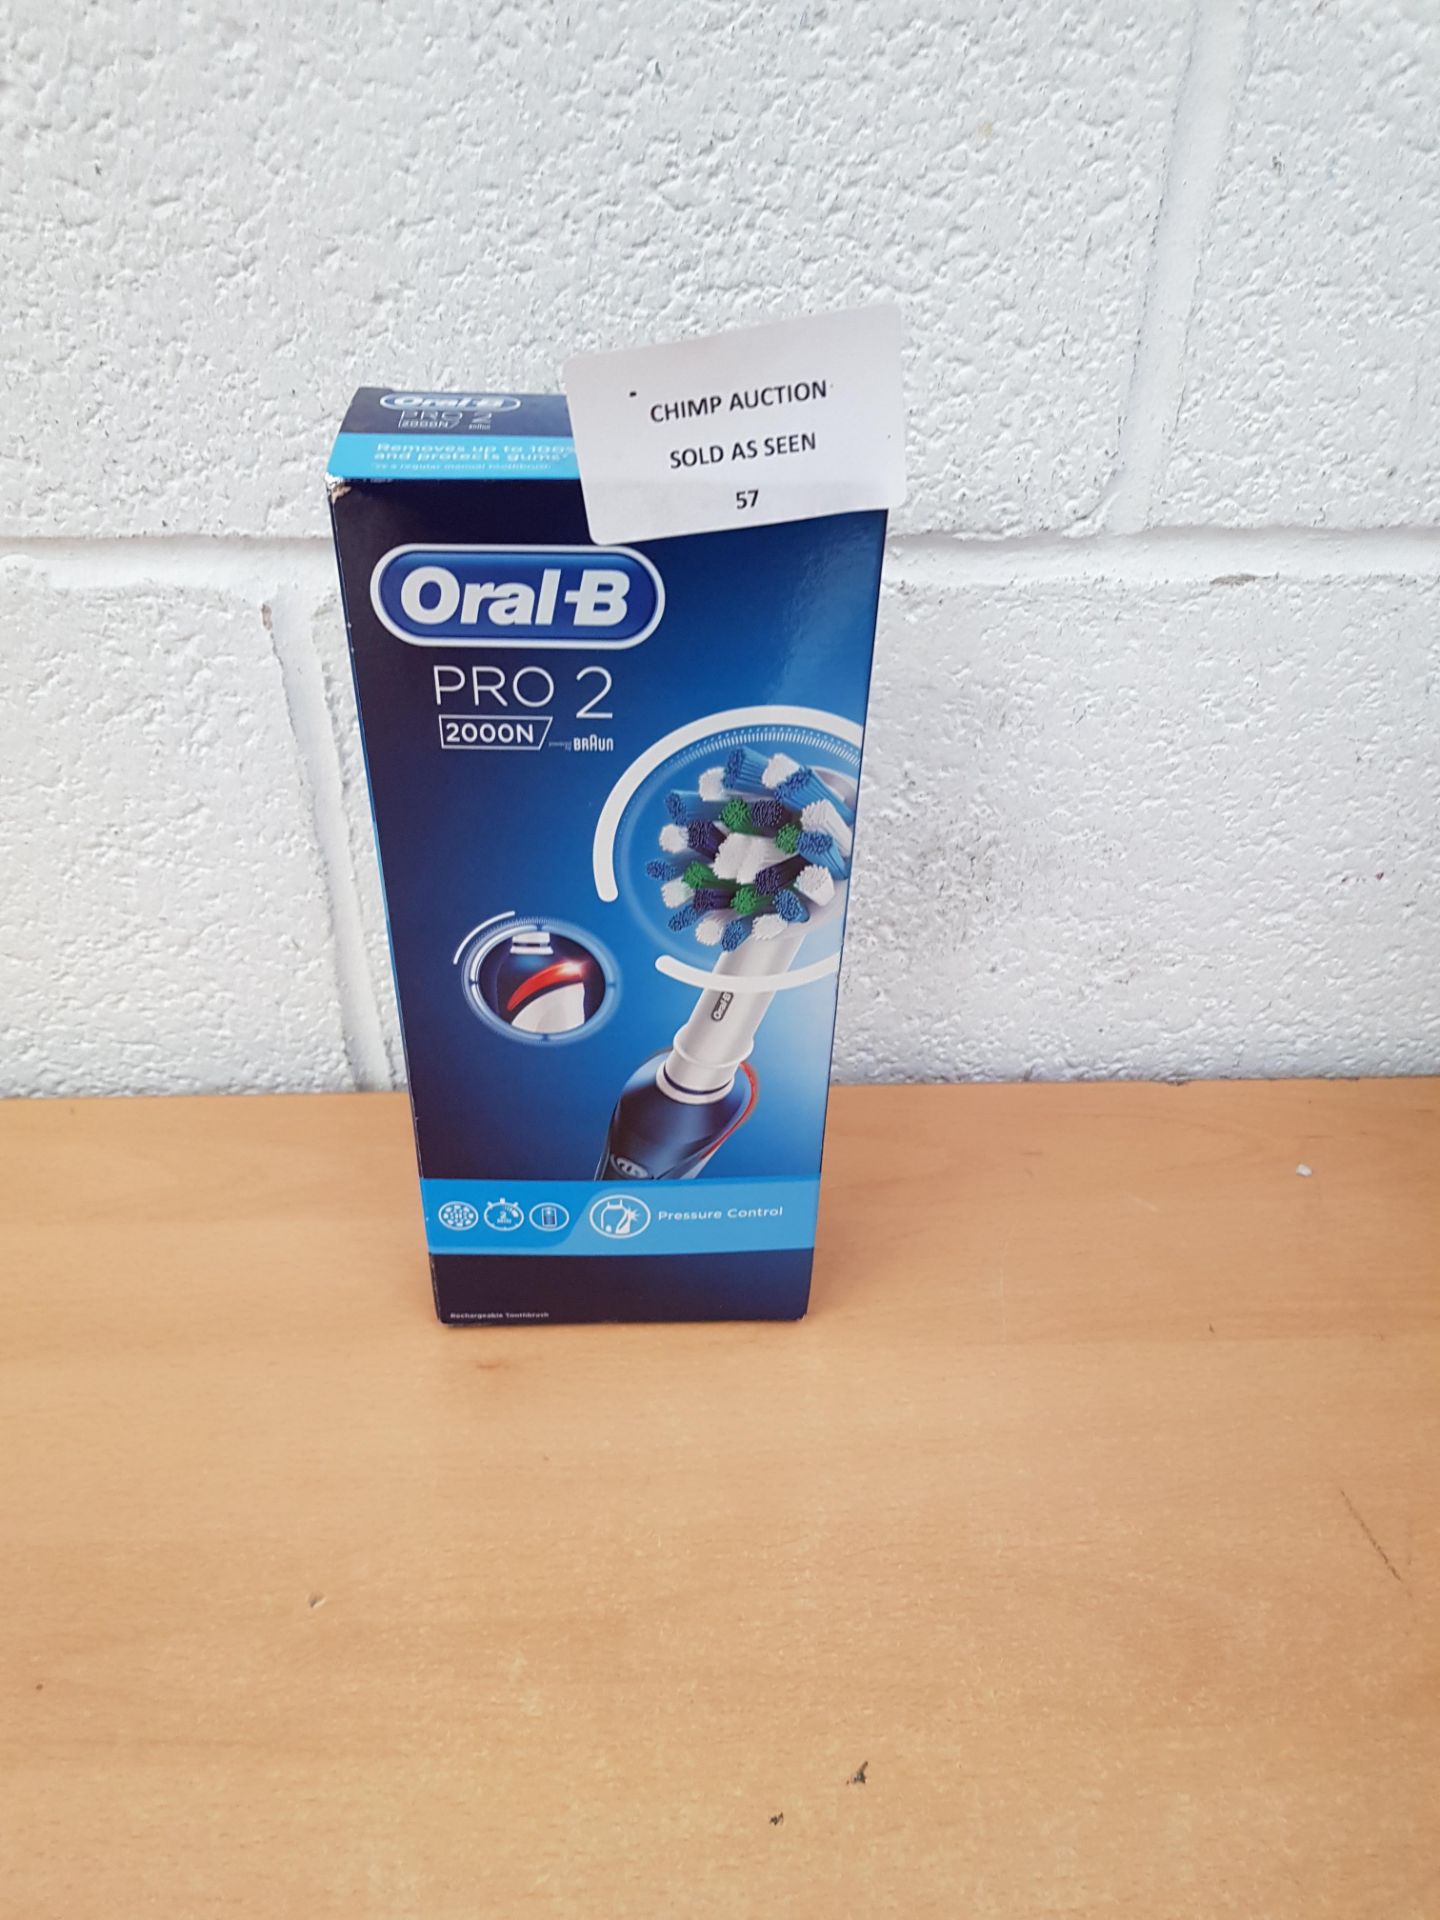 Oral-B Pro 2 2000 electric toothbrush